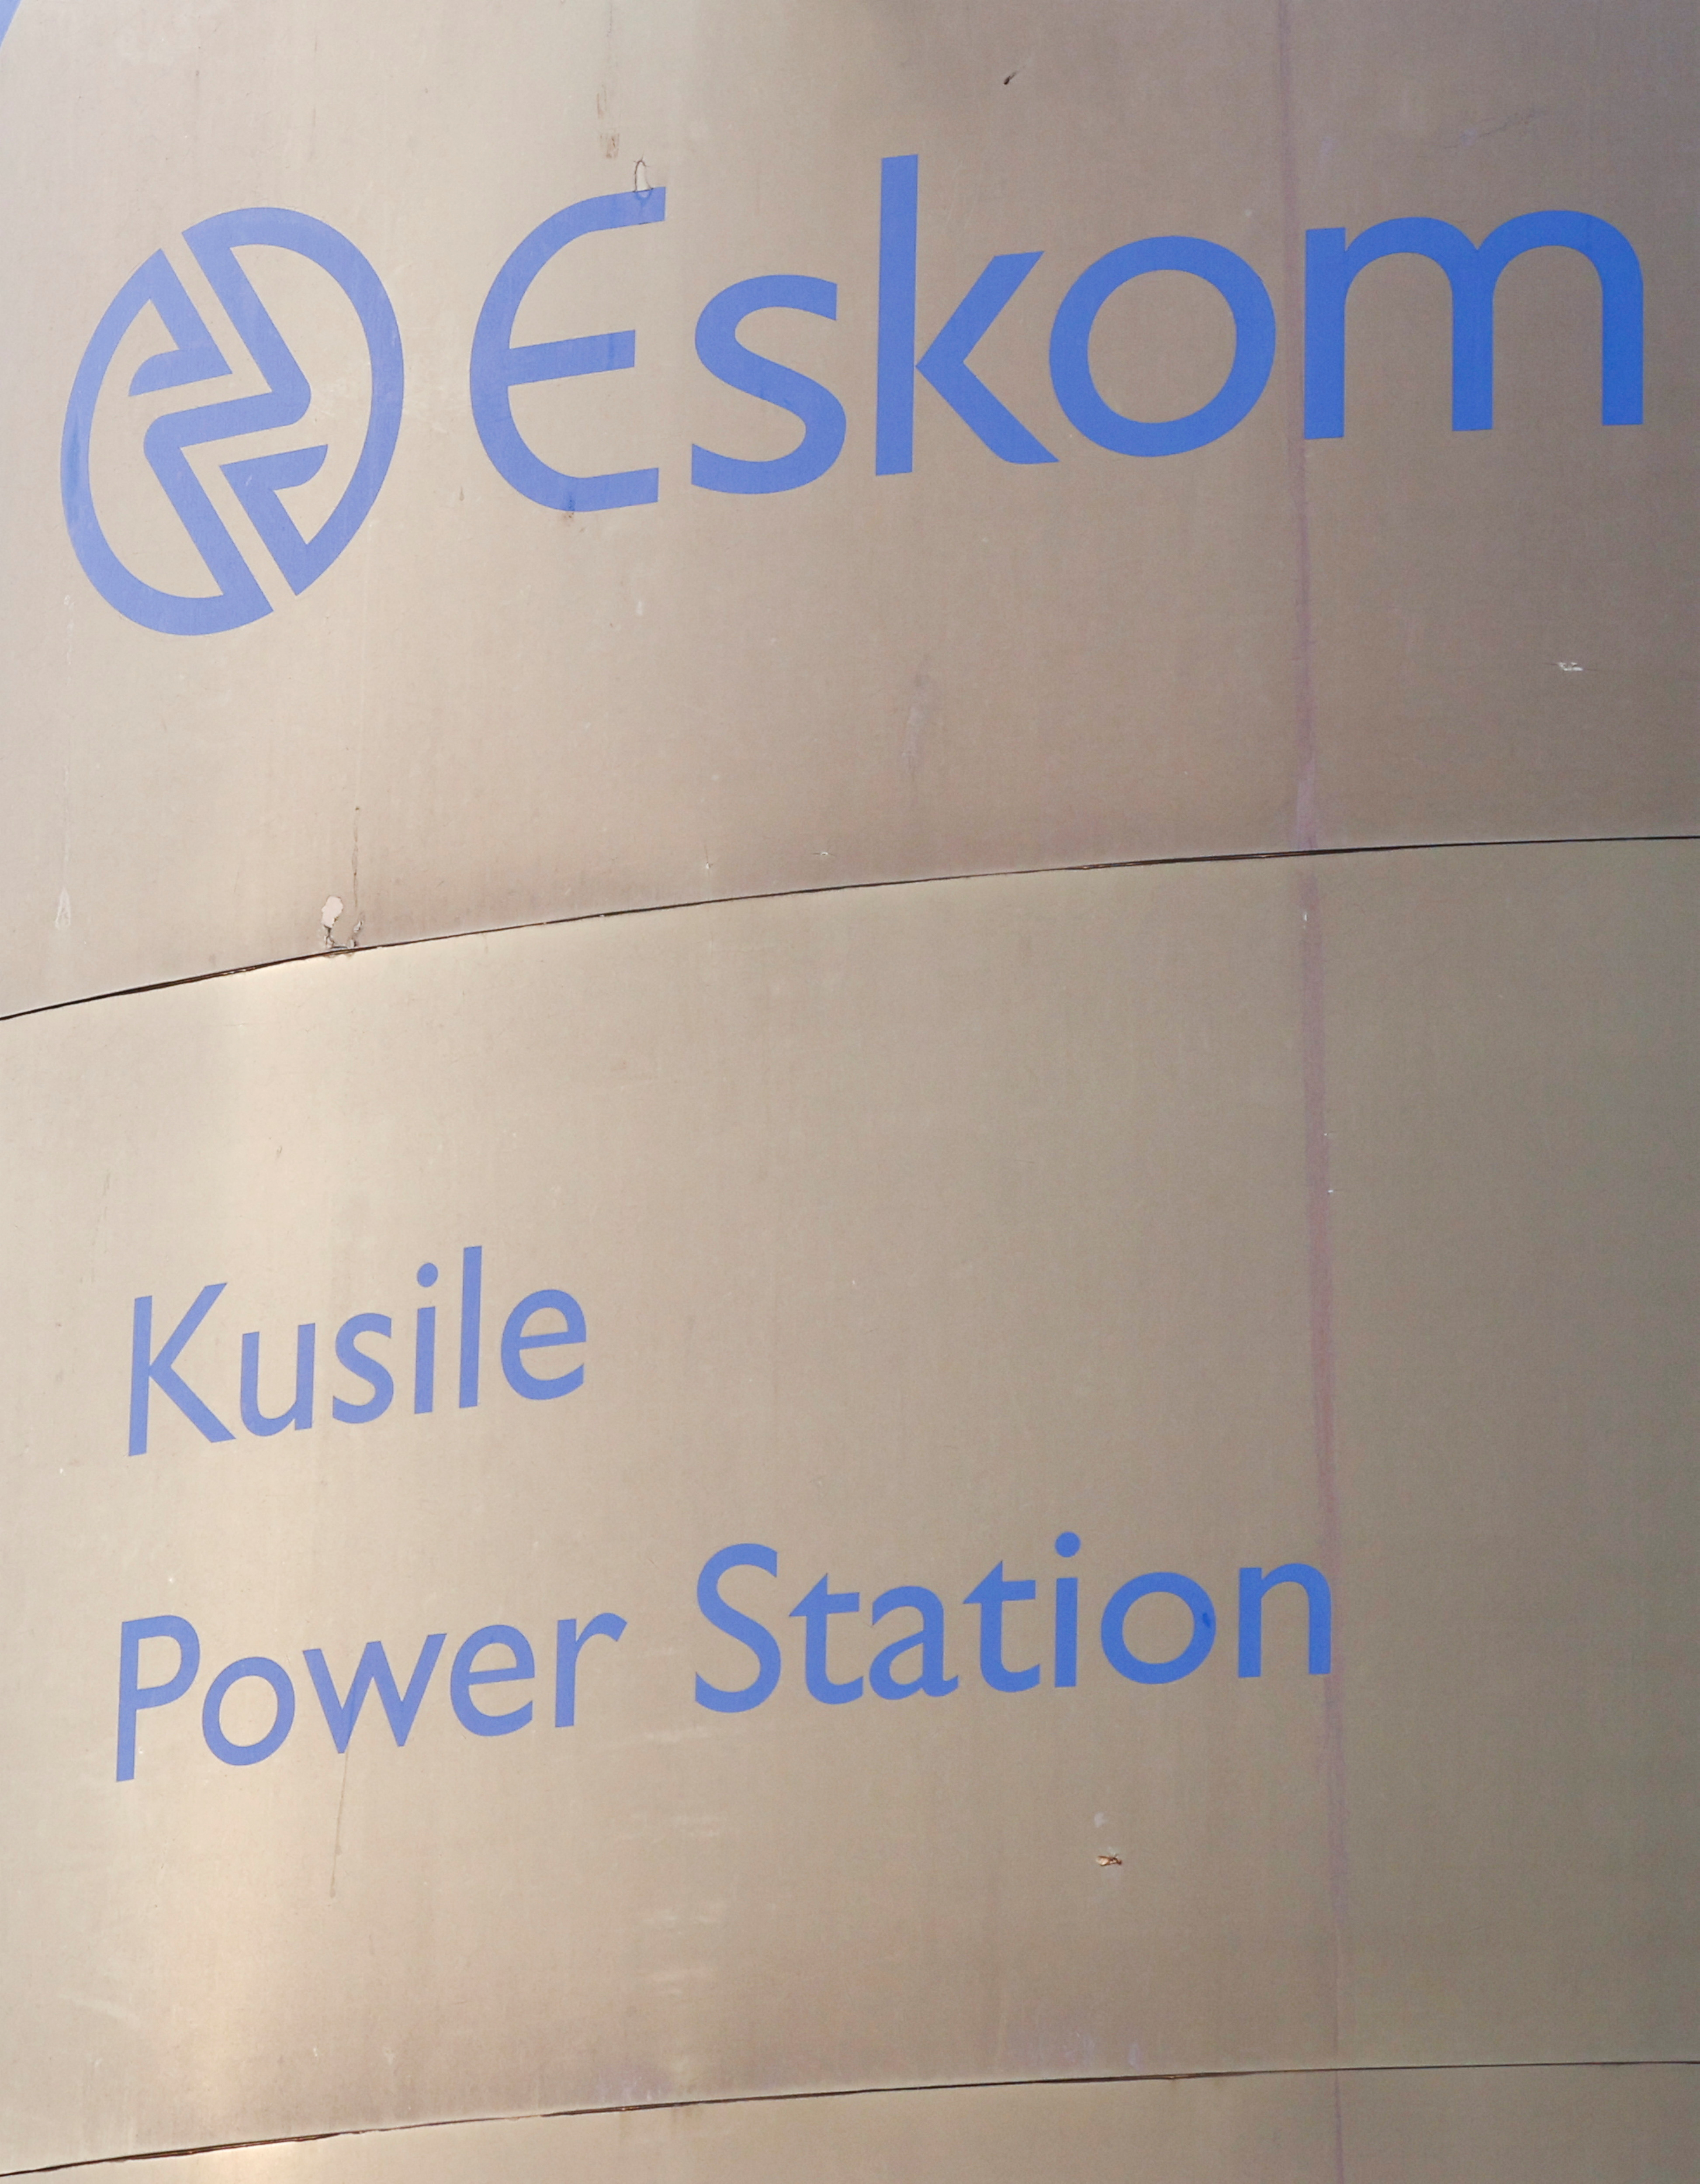 Komsilga Power Plant case: Sopam SA enters Bolloré's accounts in 5  countries - Kapital Afrik